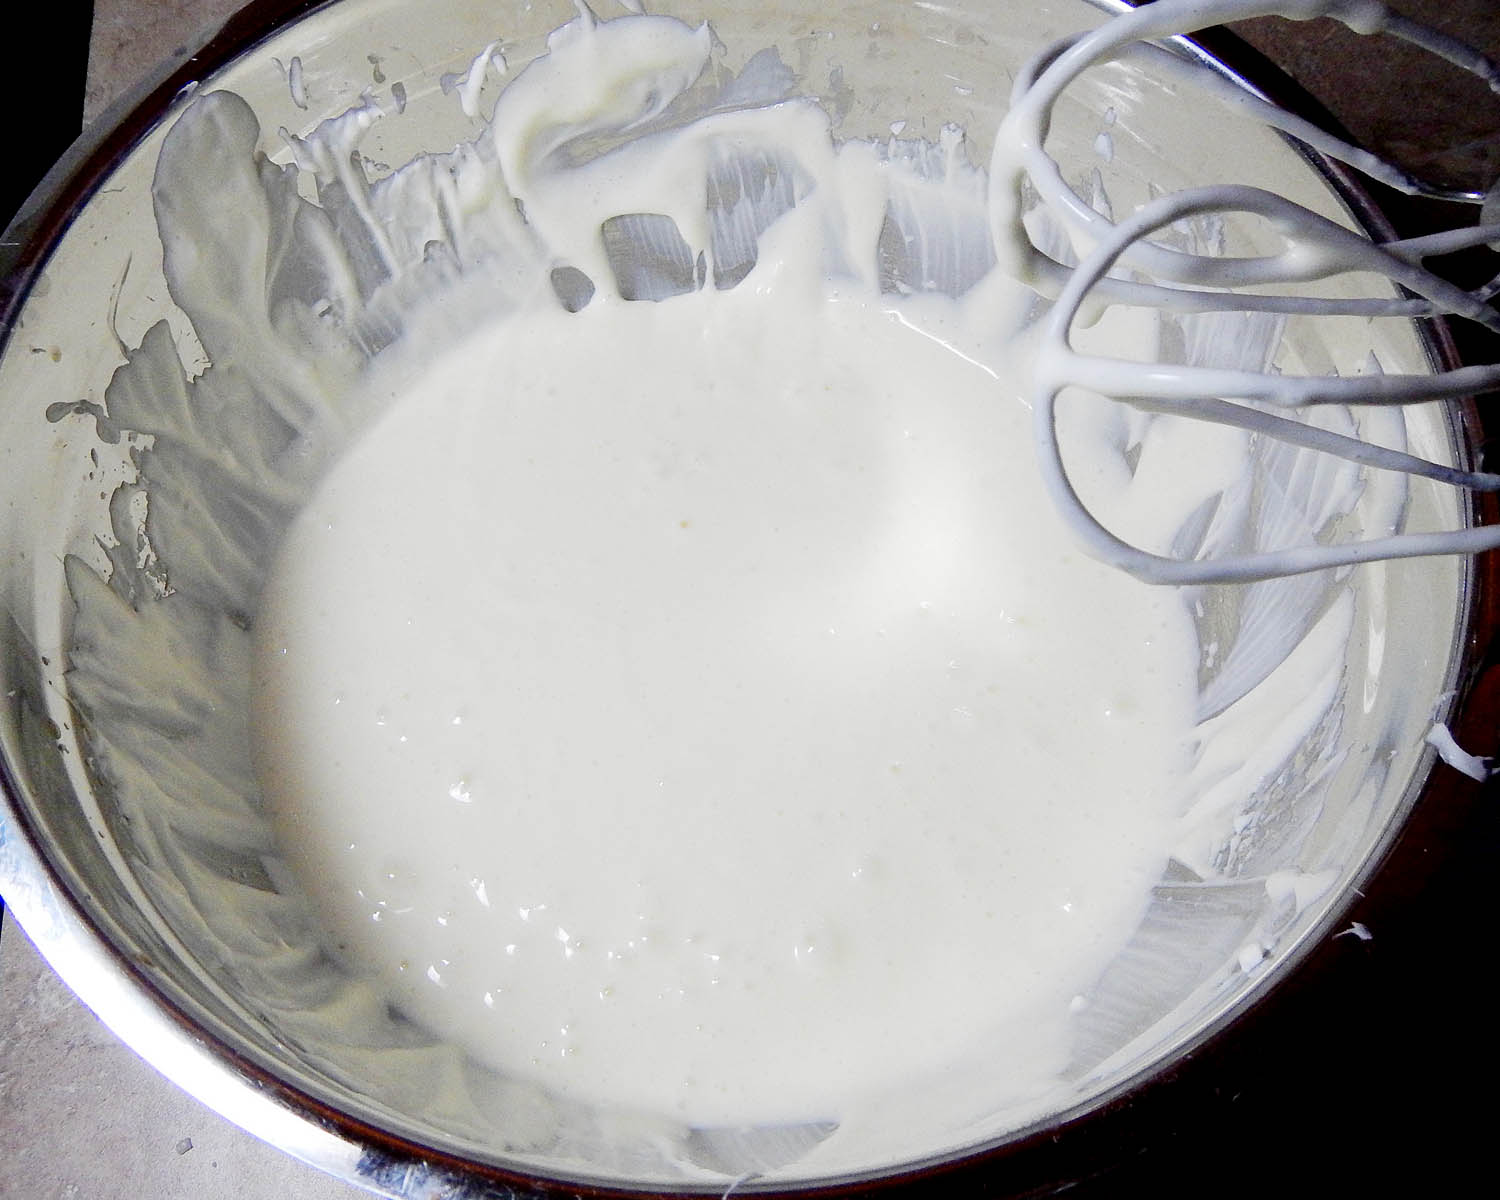 Frozen yogurt maker costco canada